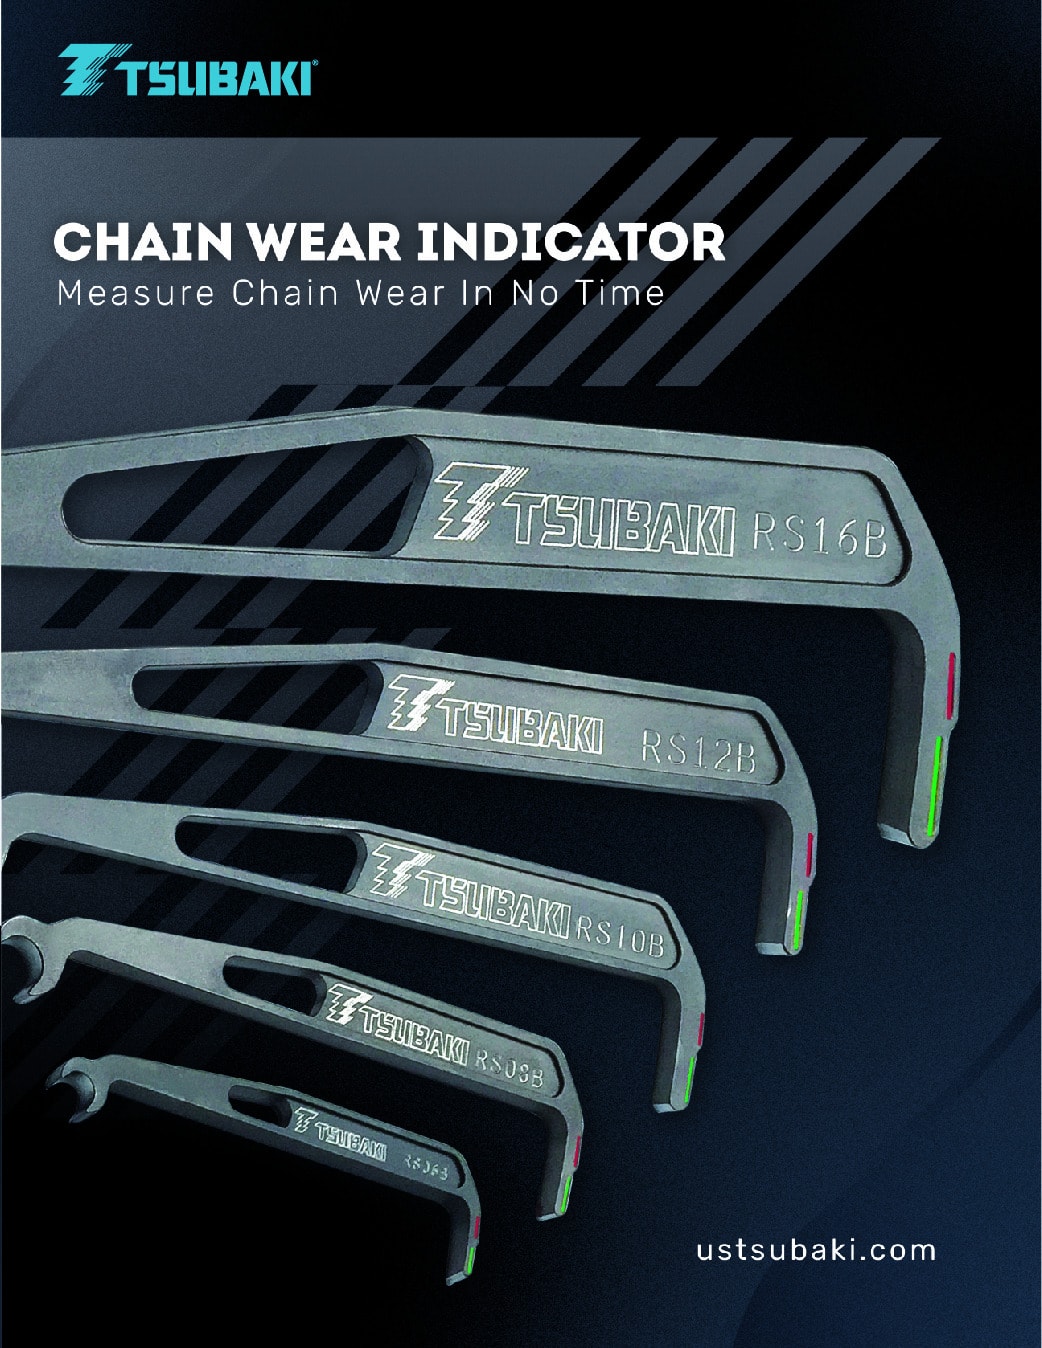 Chain Wear Indicator Kit Brochure